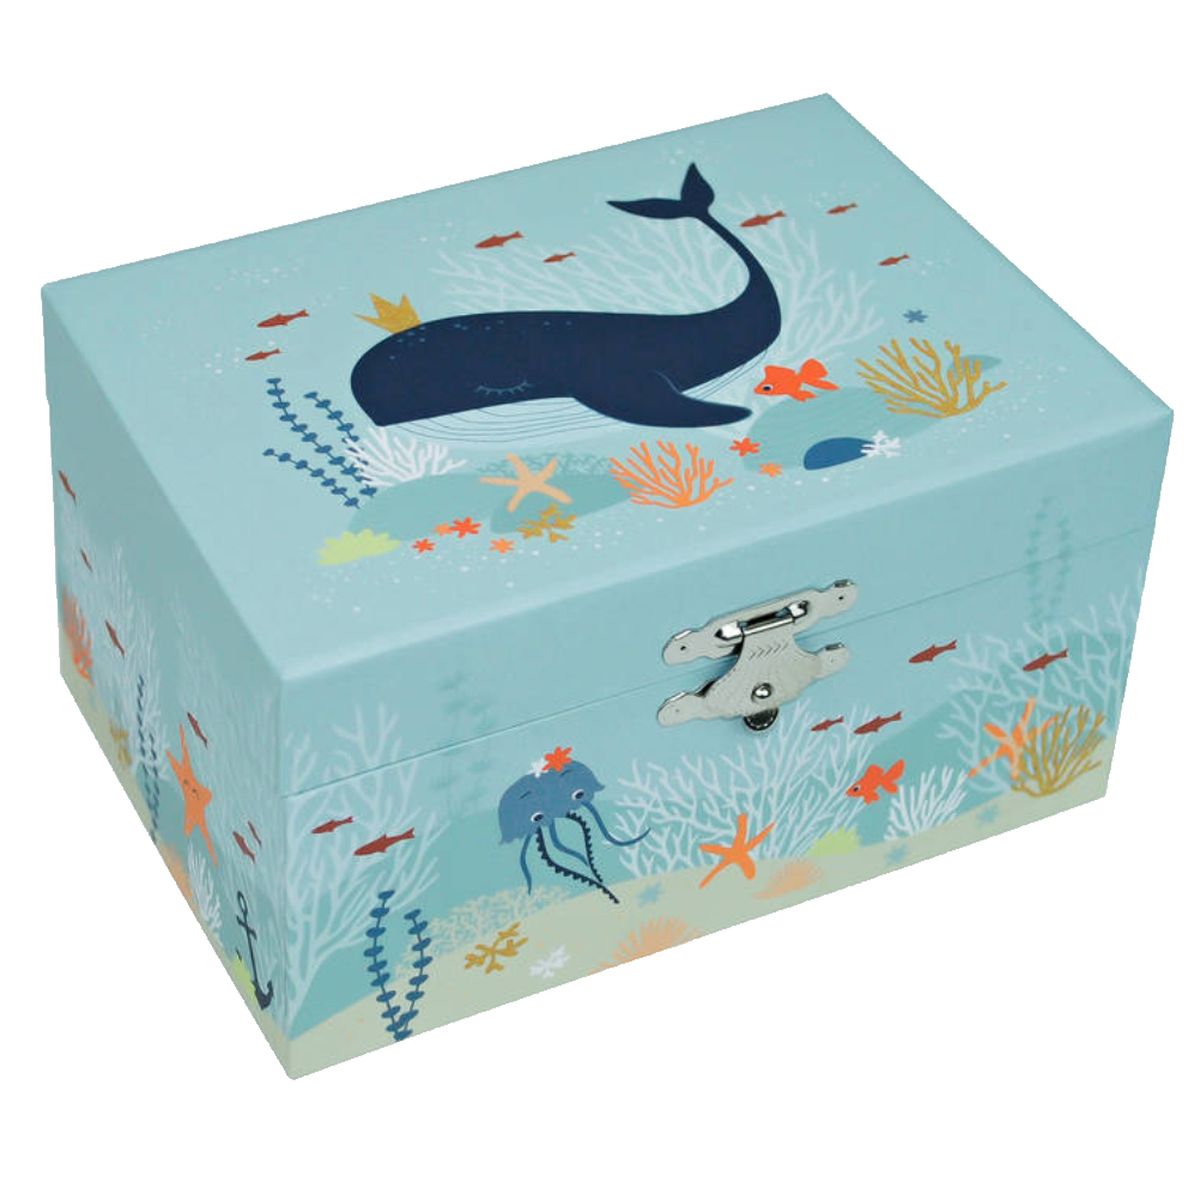 Ocean musical jewelry box